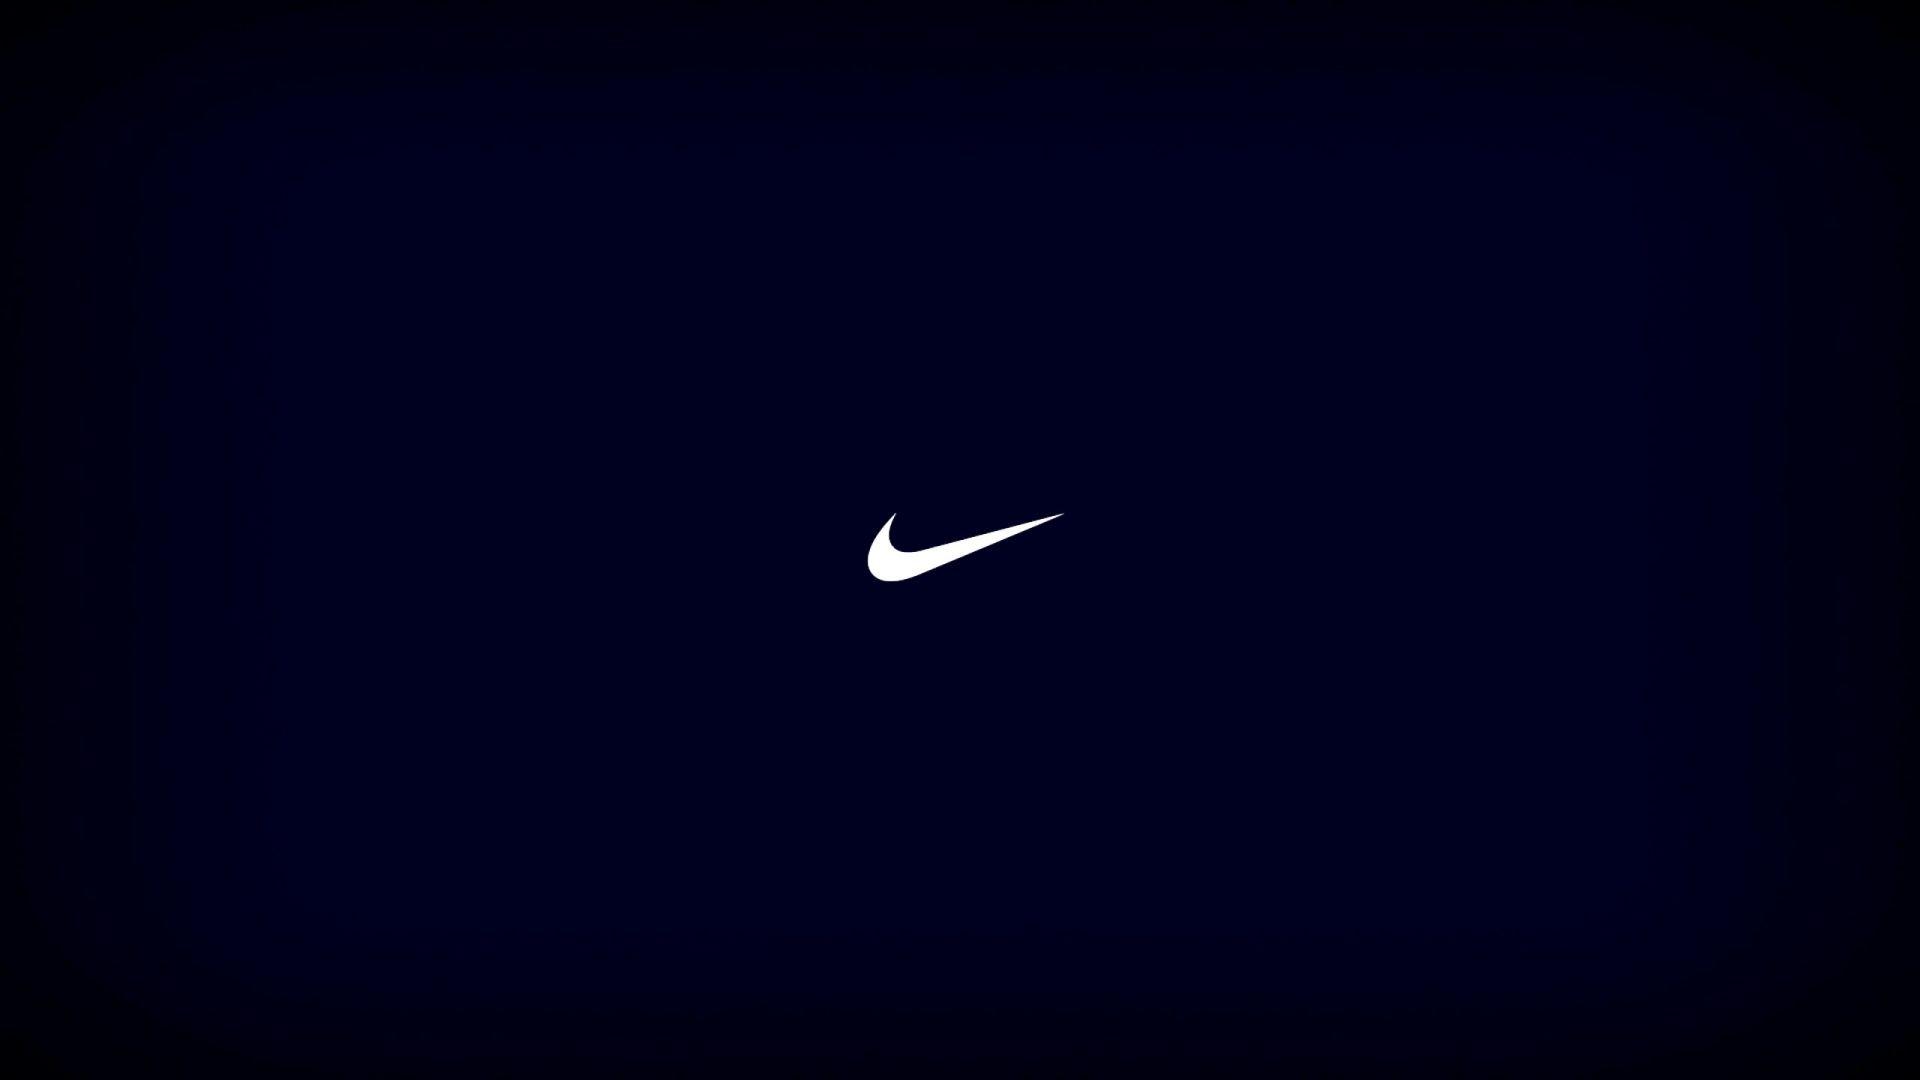 Nike Black Wallpaper